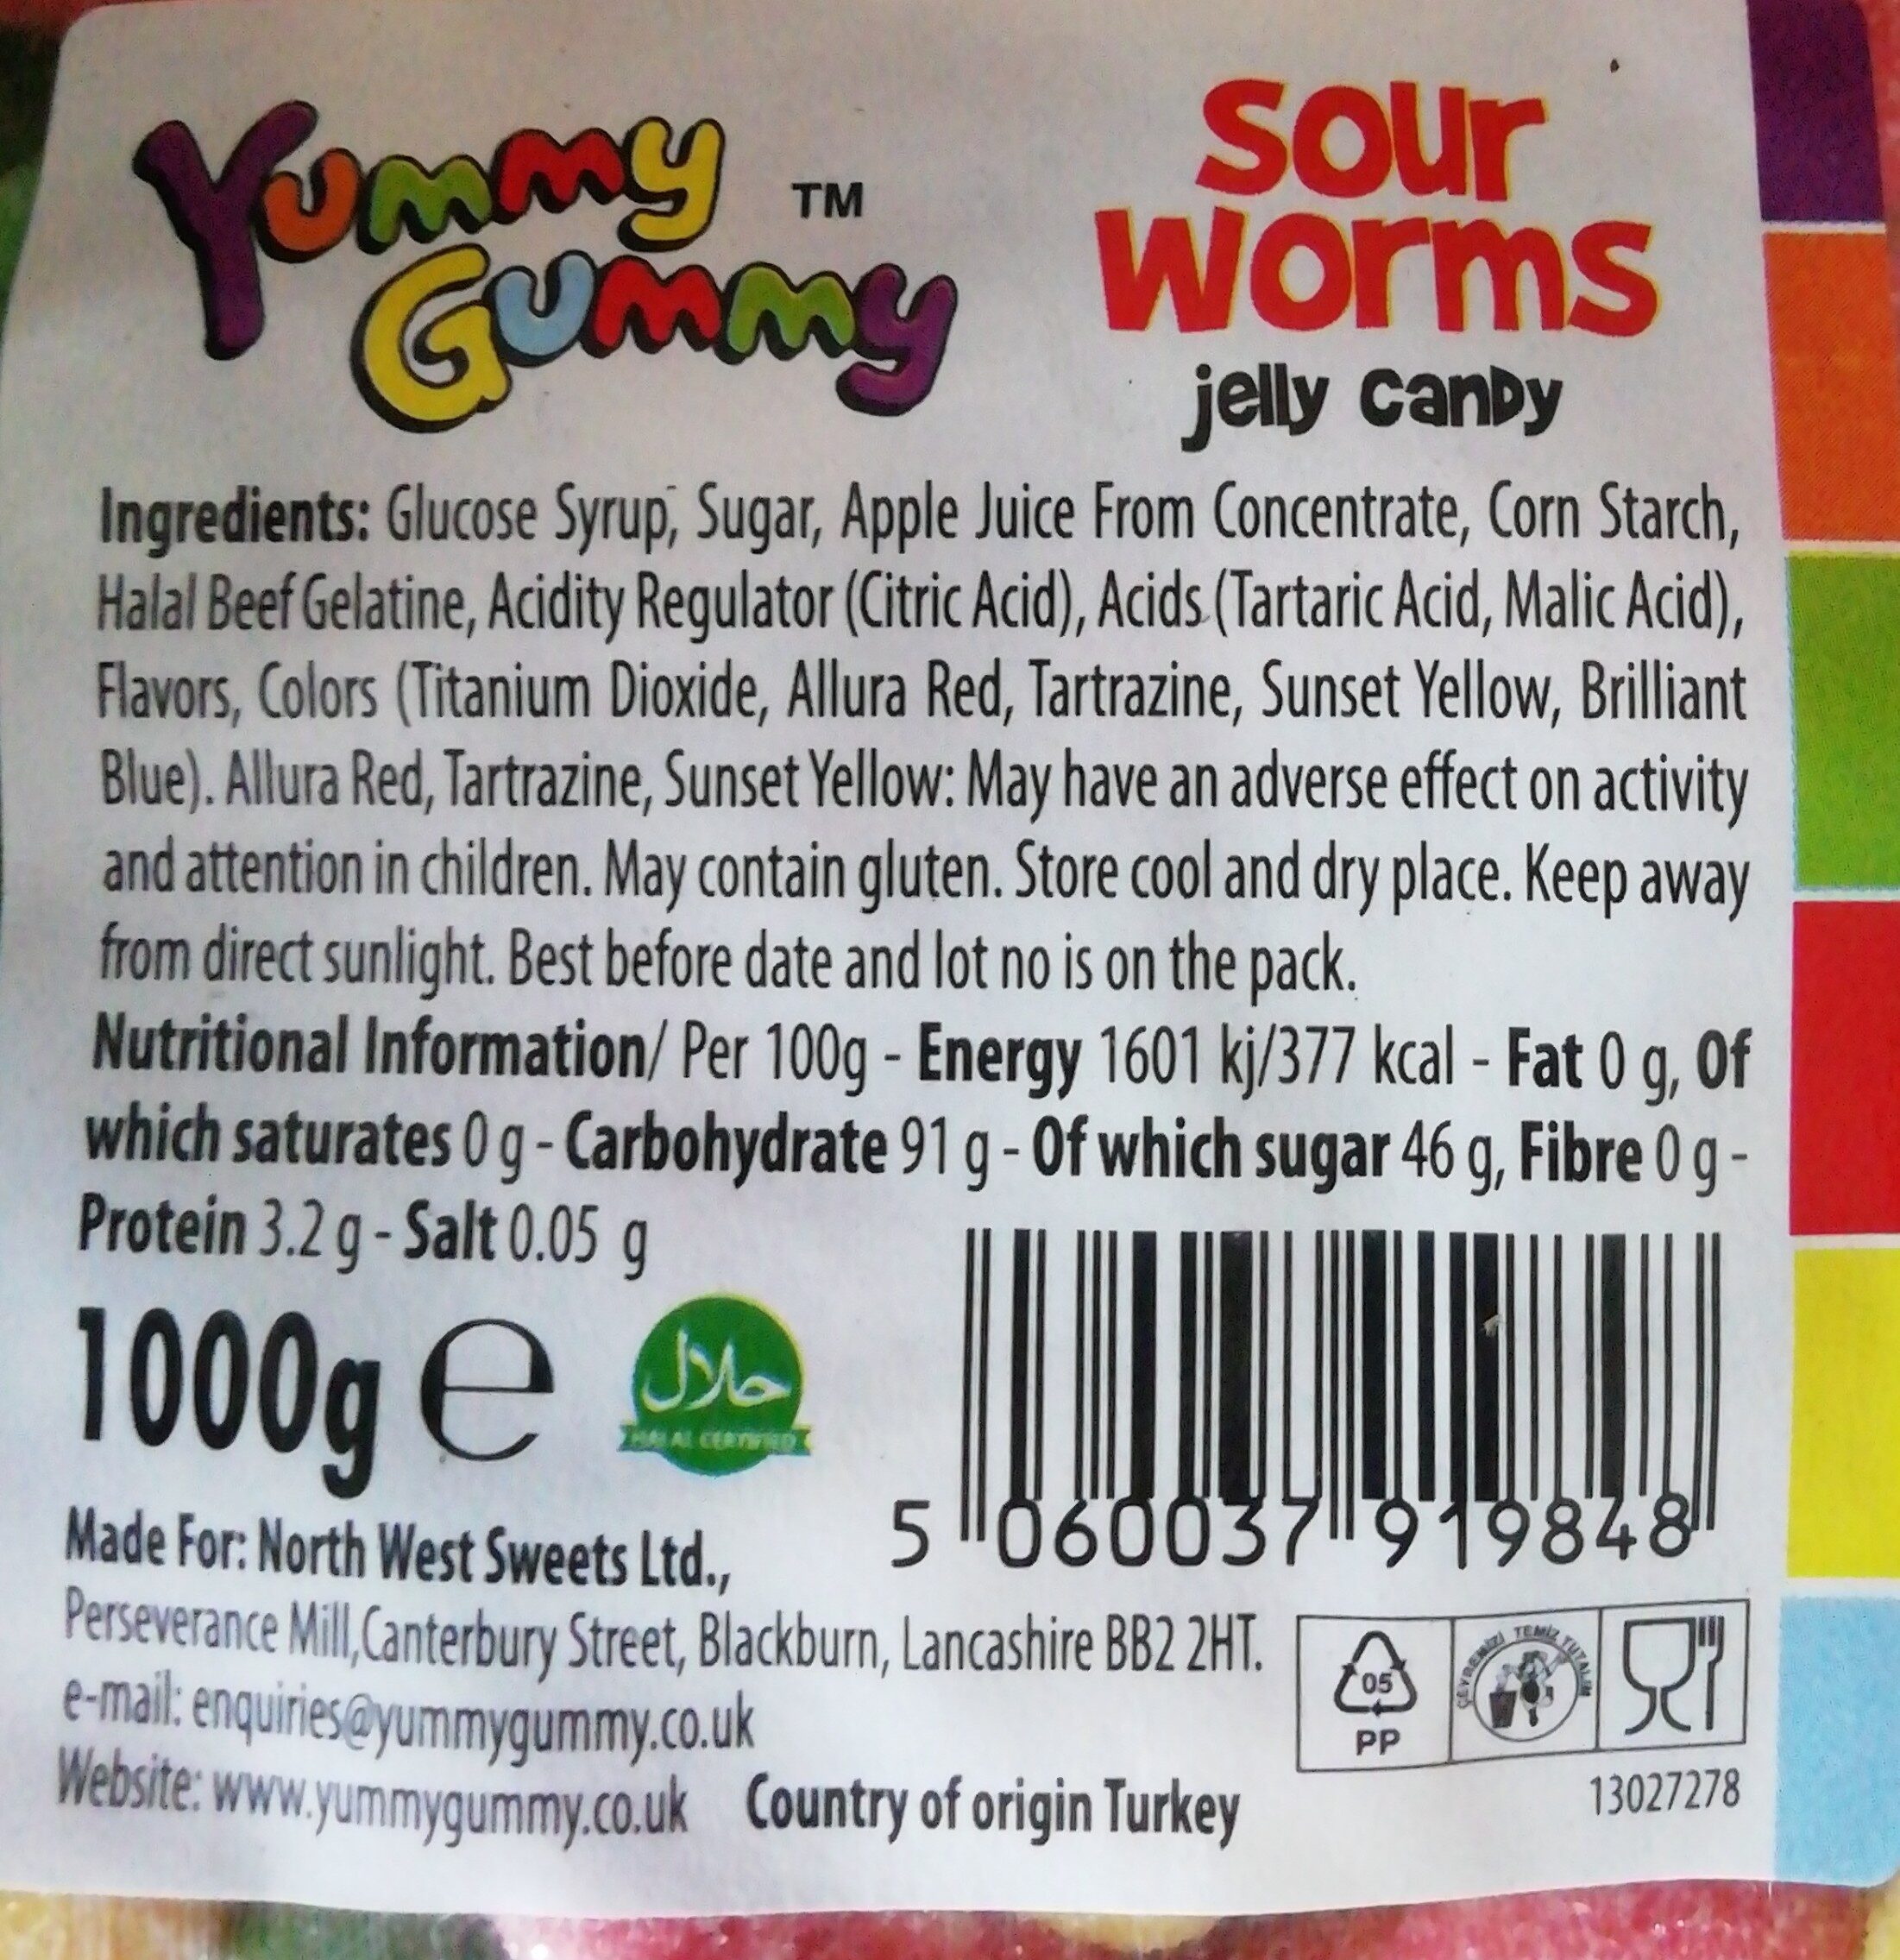 Yummy gummy sour worms - Ingredients